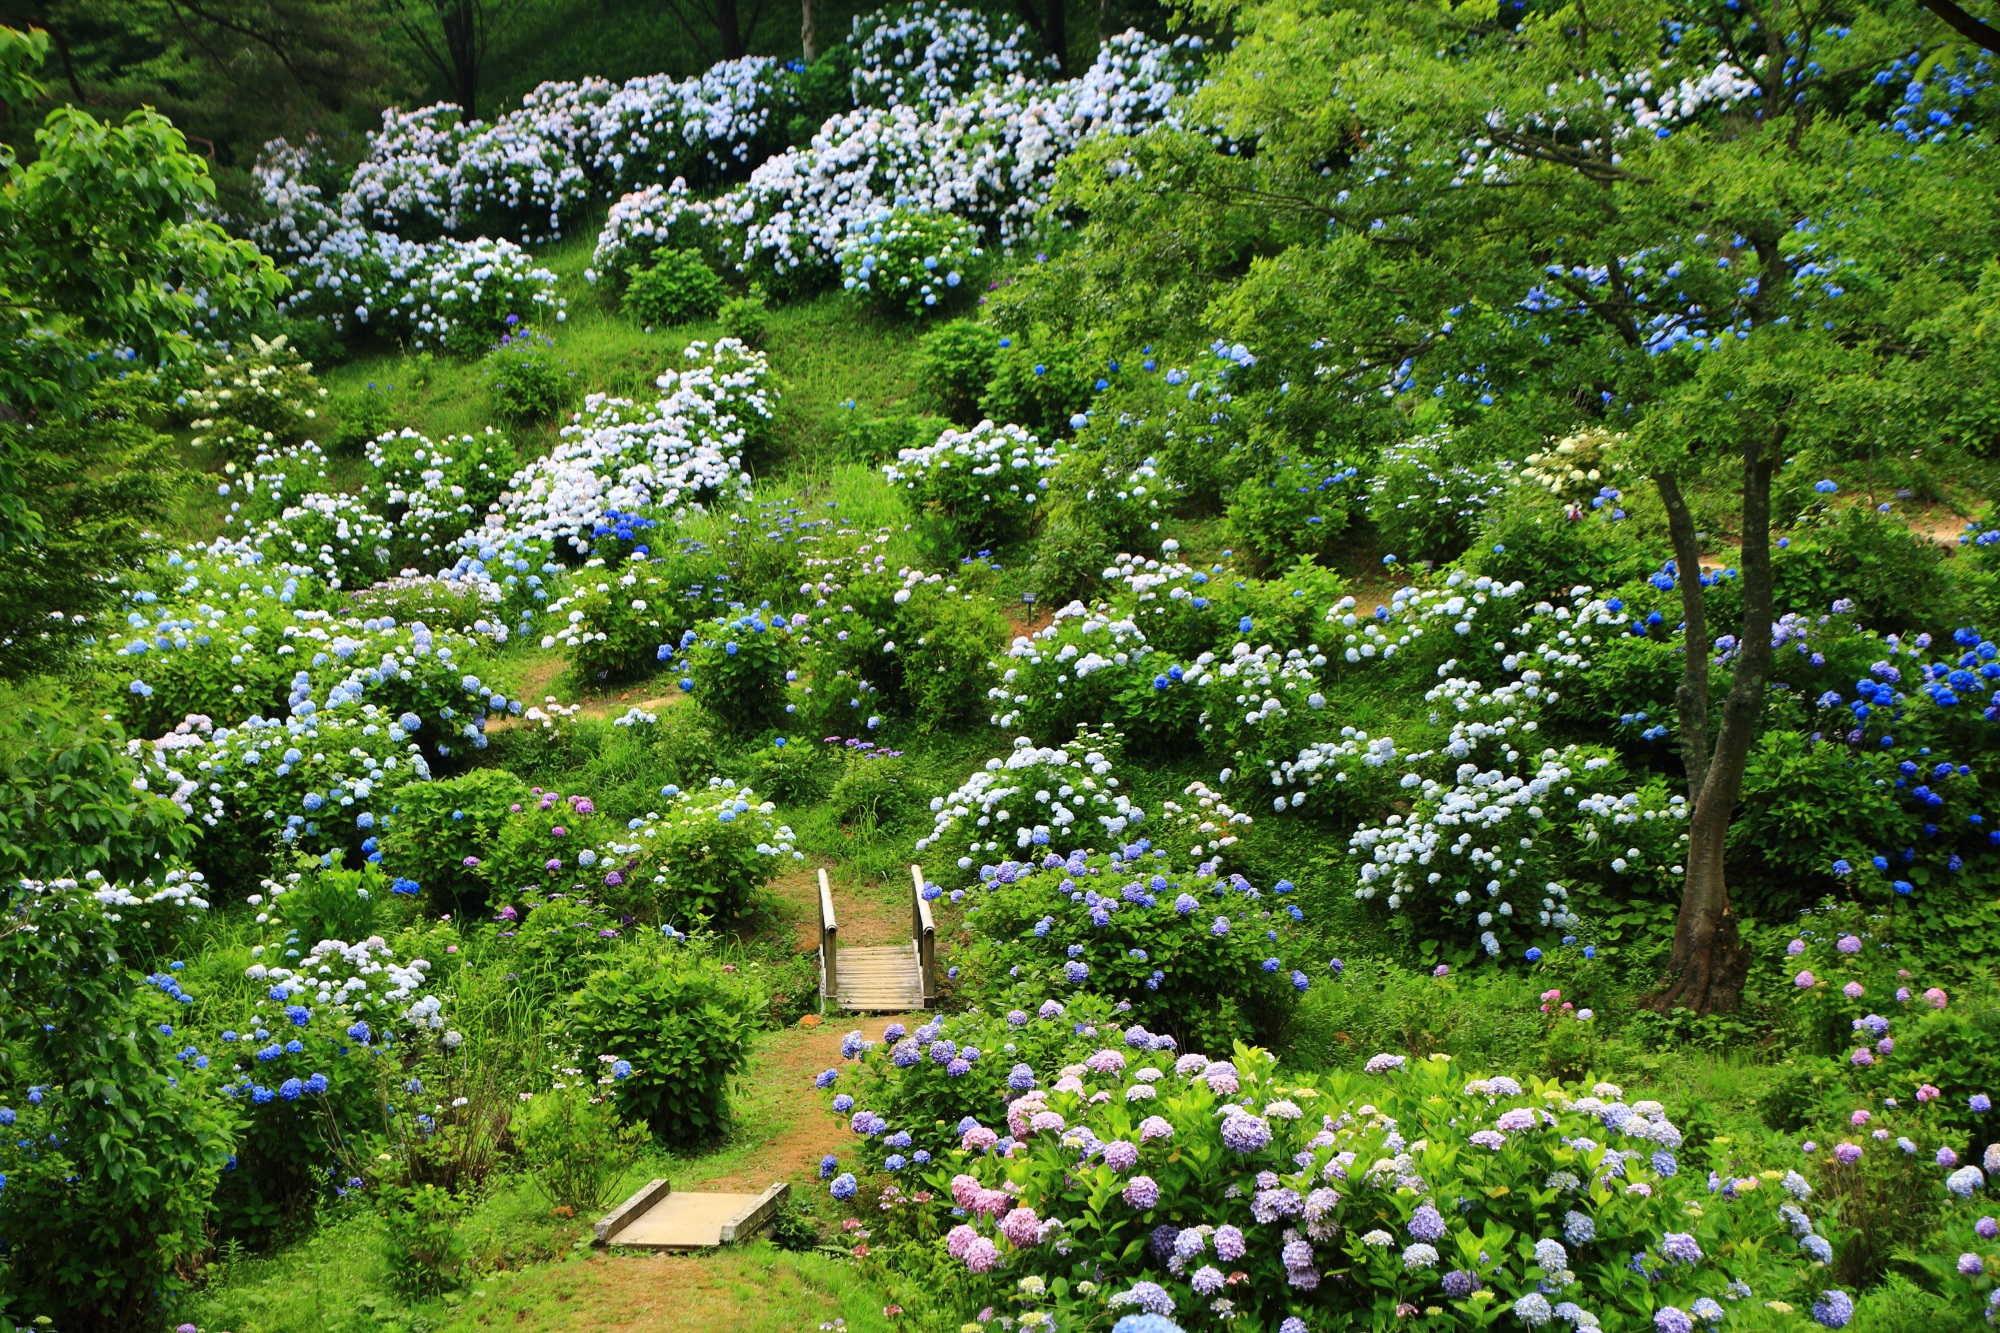 Kyoto Maizuru Floral and Green Public Corporation hydrangea